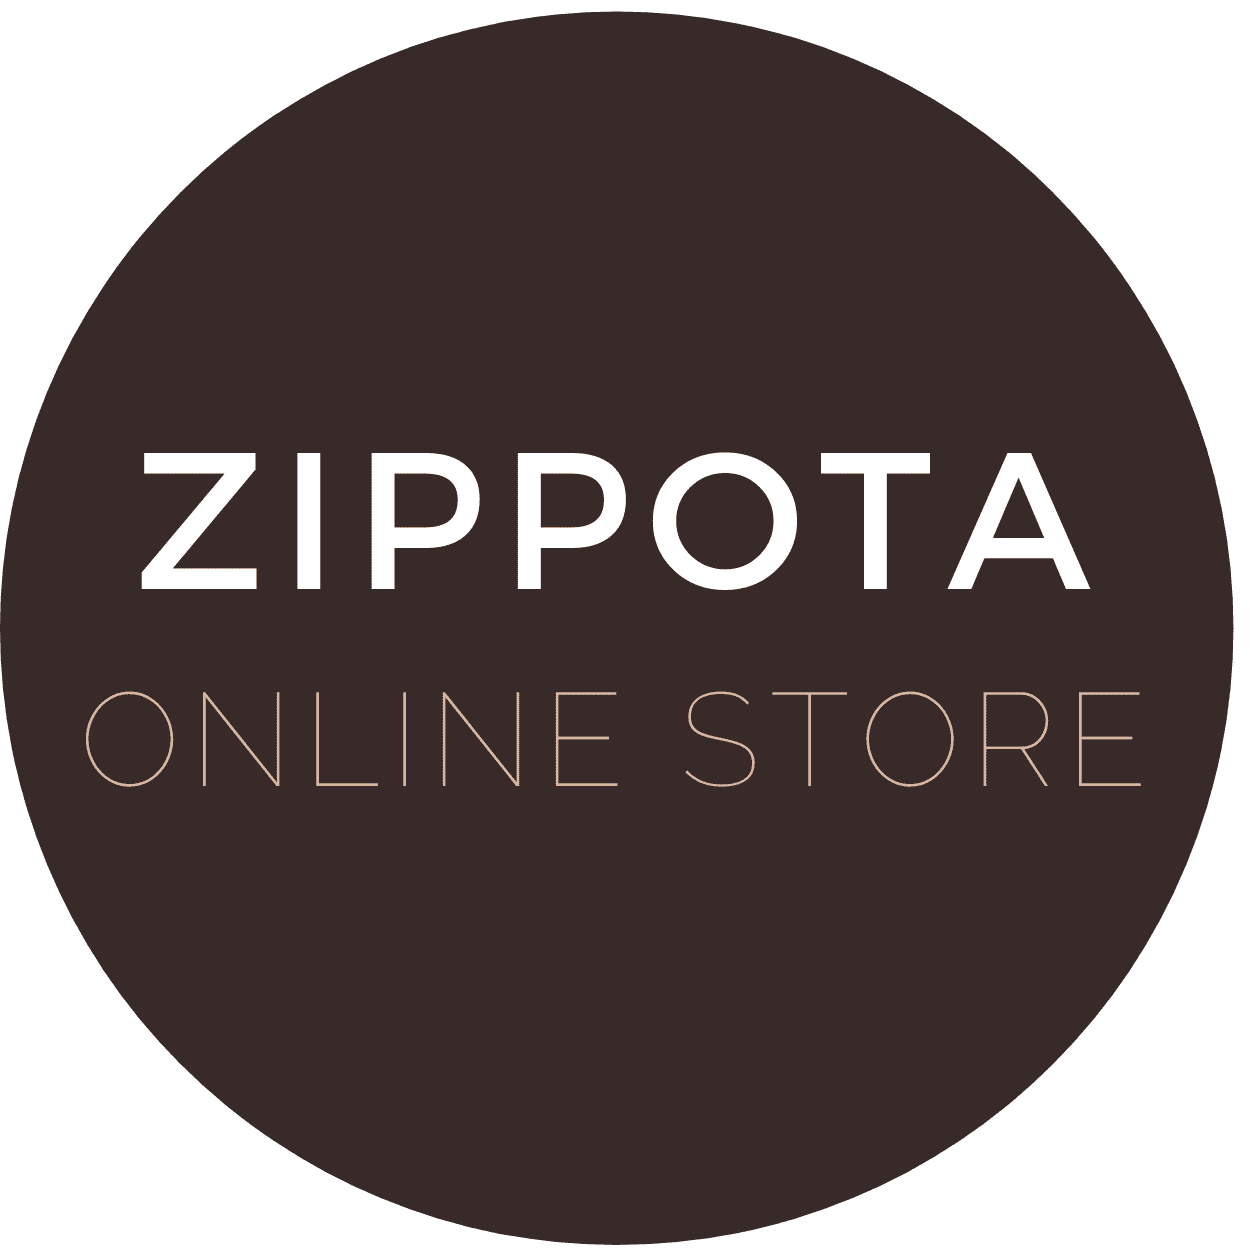 CheshTech Work: Zippota